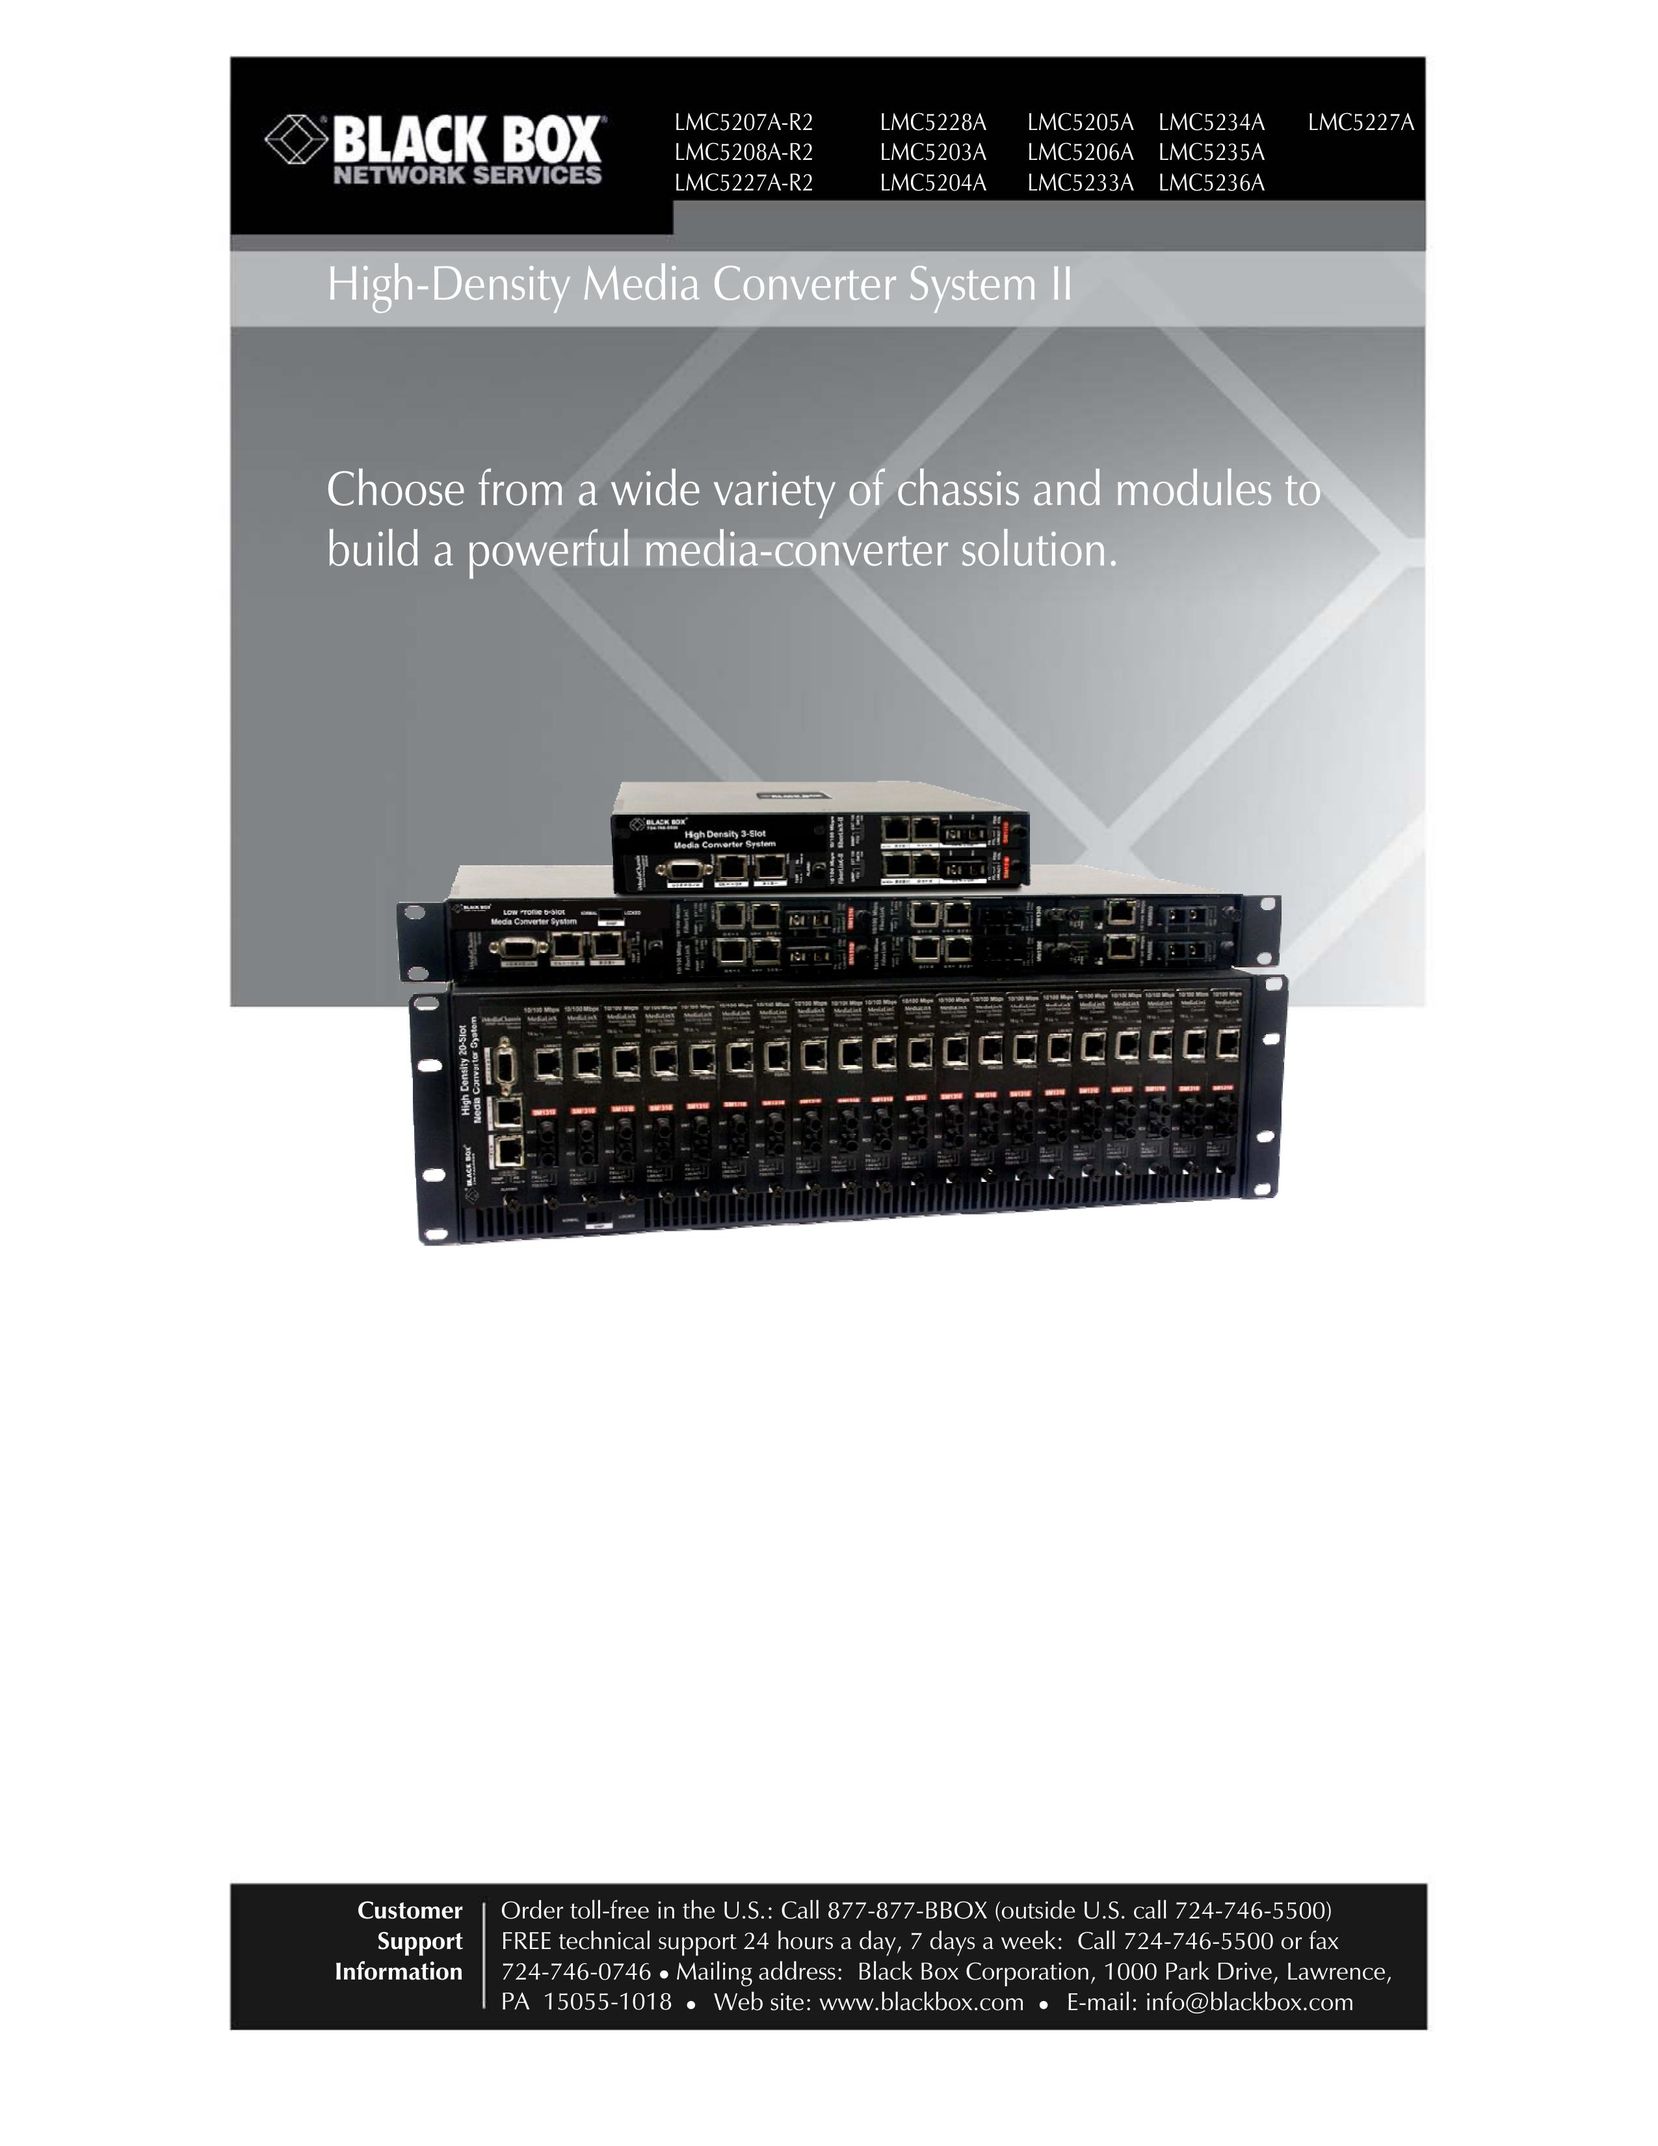 Black Box Black Box High-Density Media Converter System II Portable Media Storage User Manual